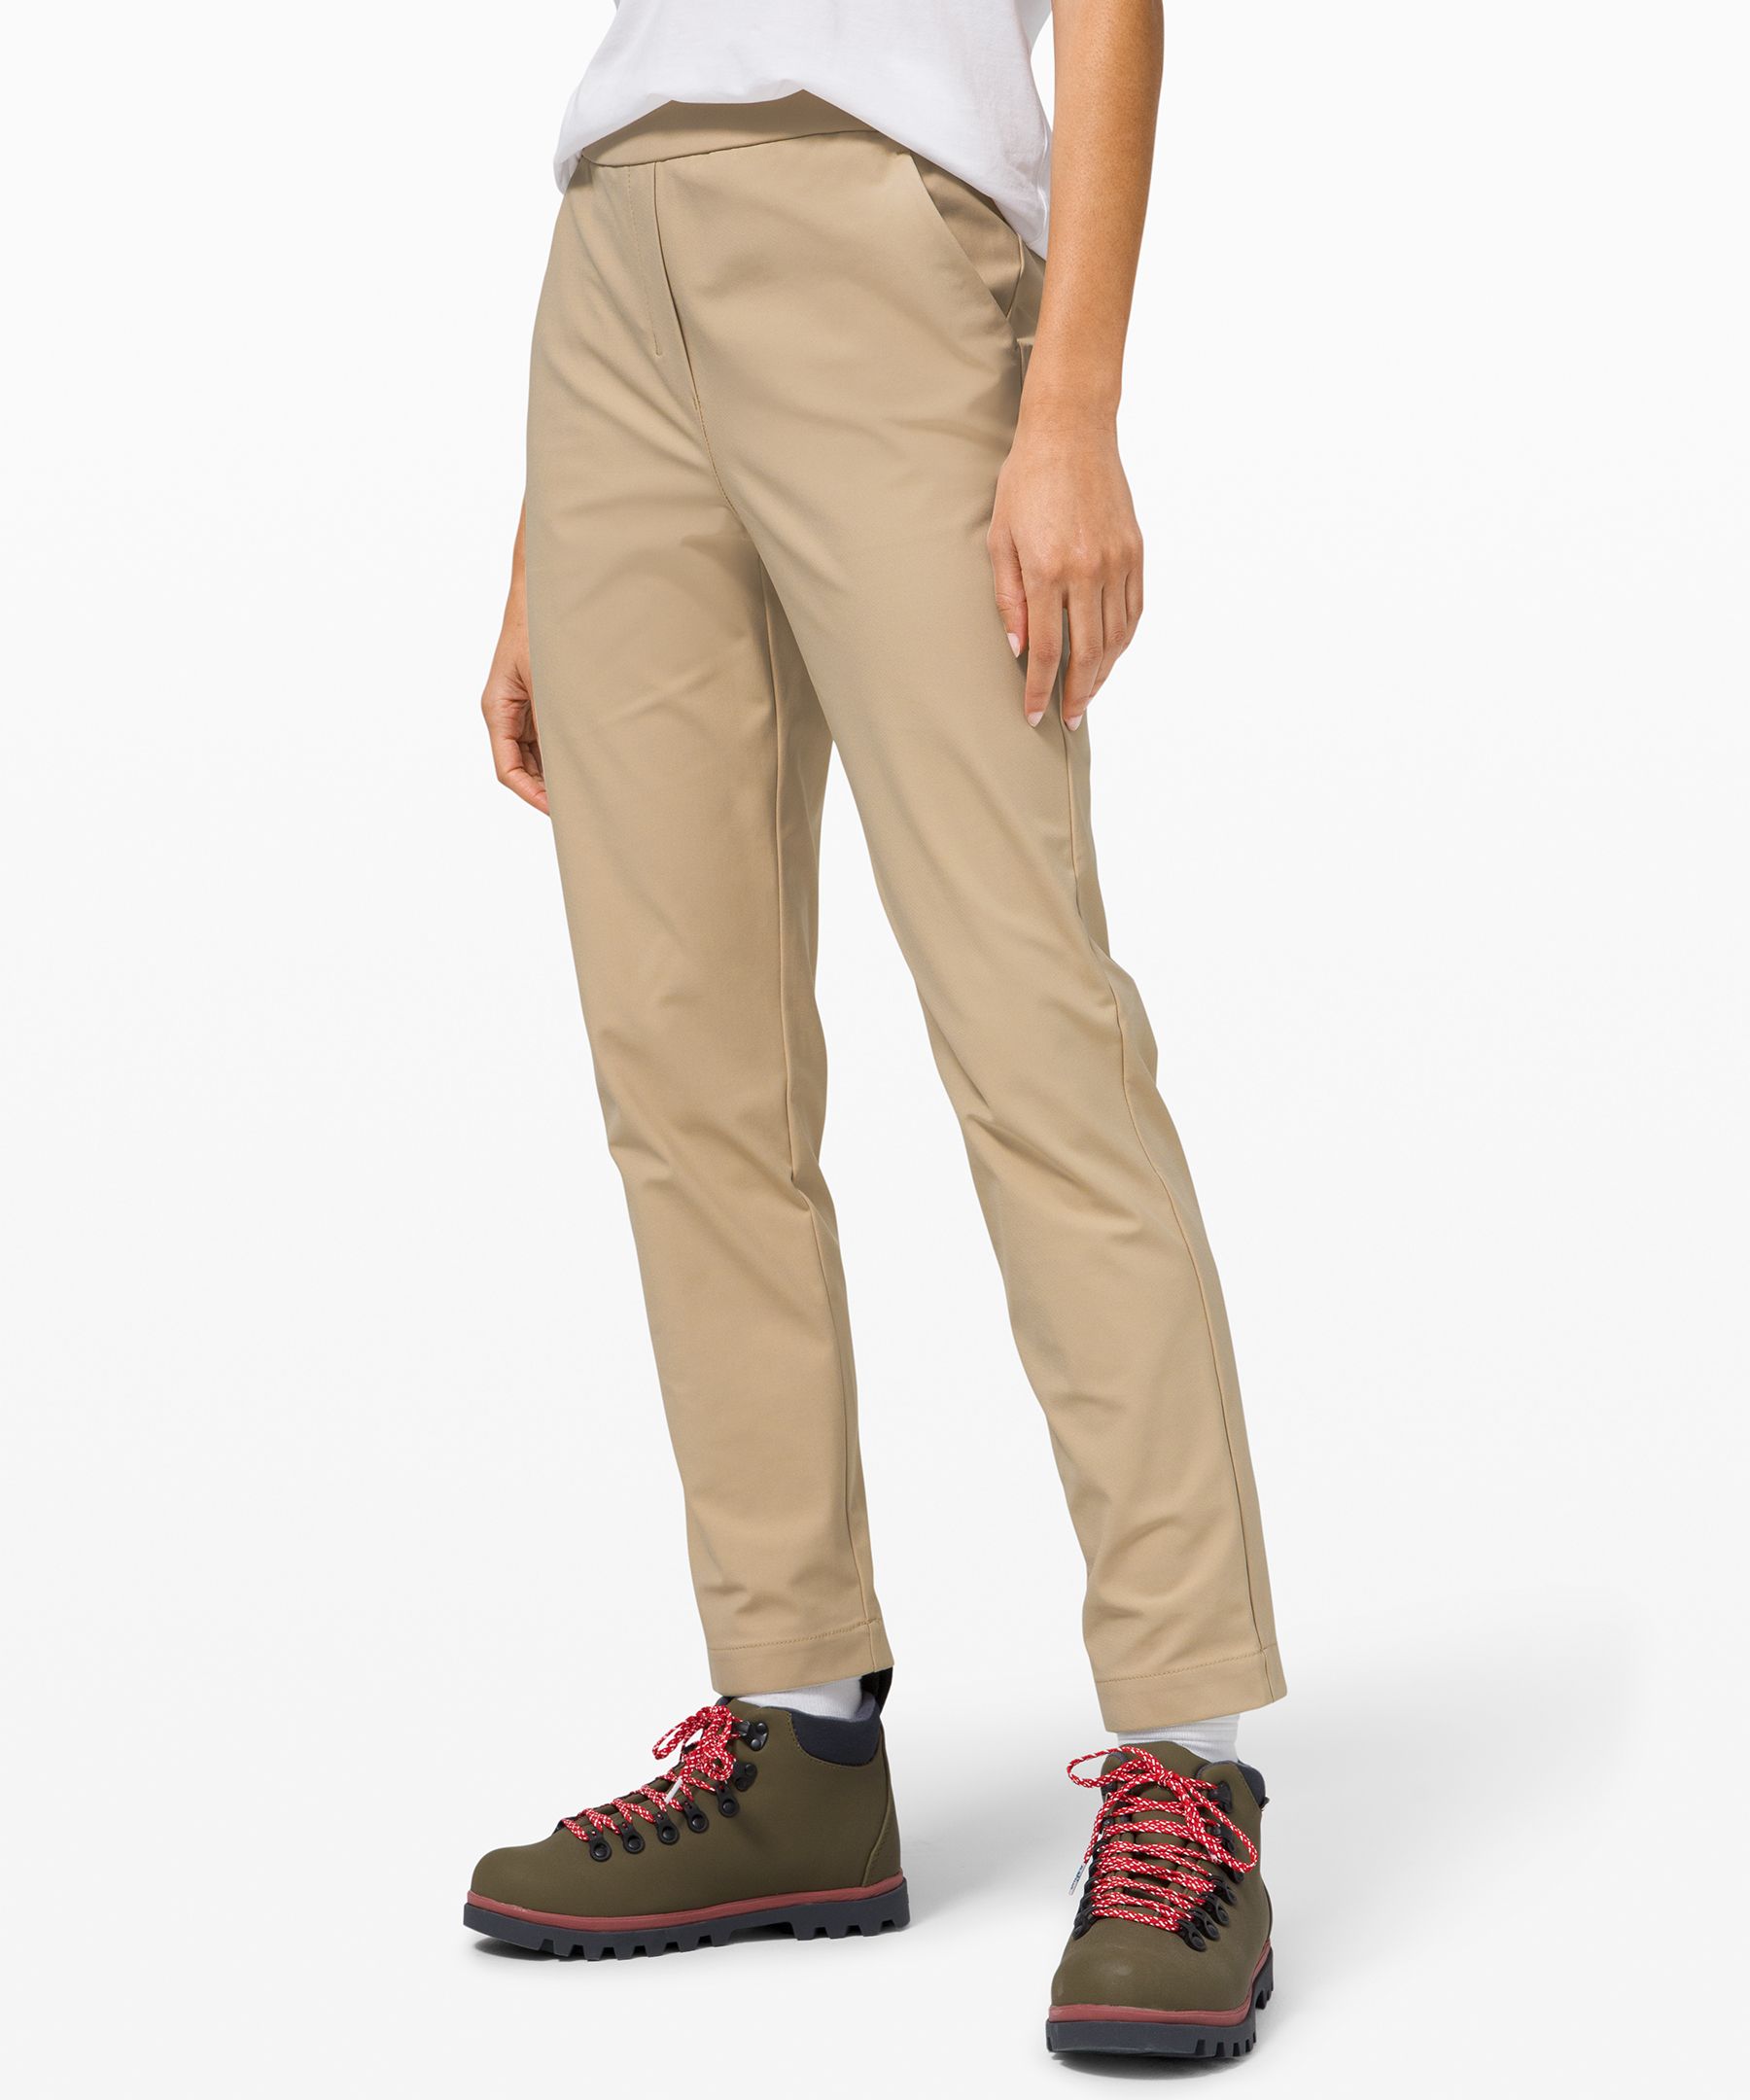 lululemon khaki pants